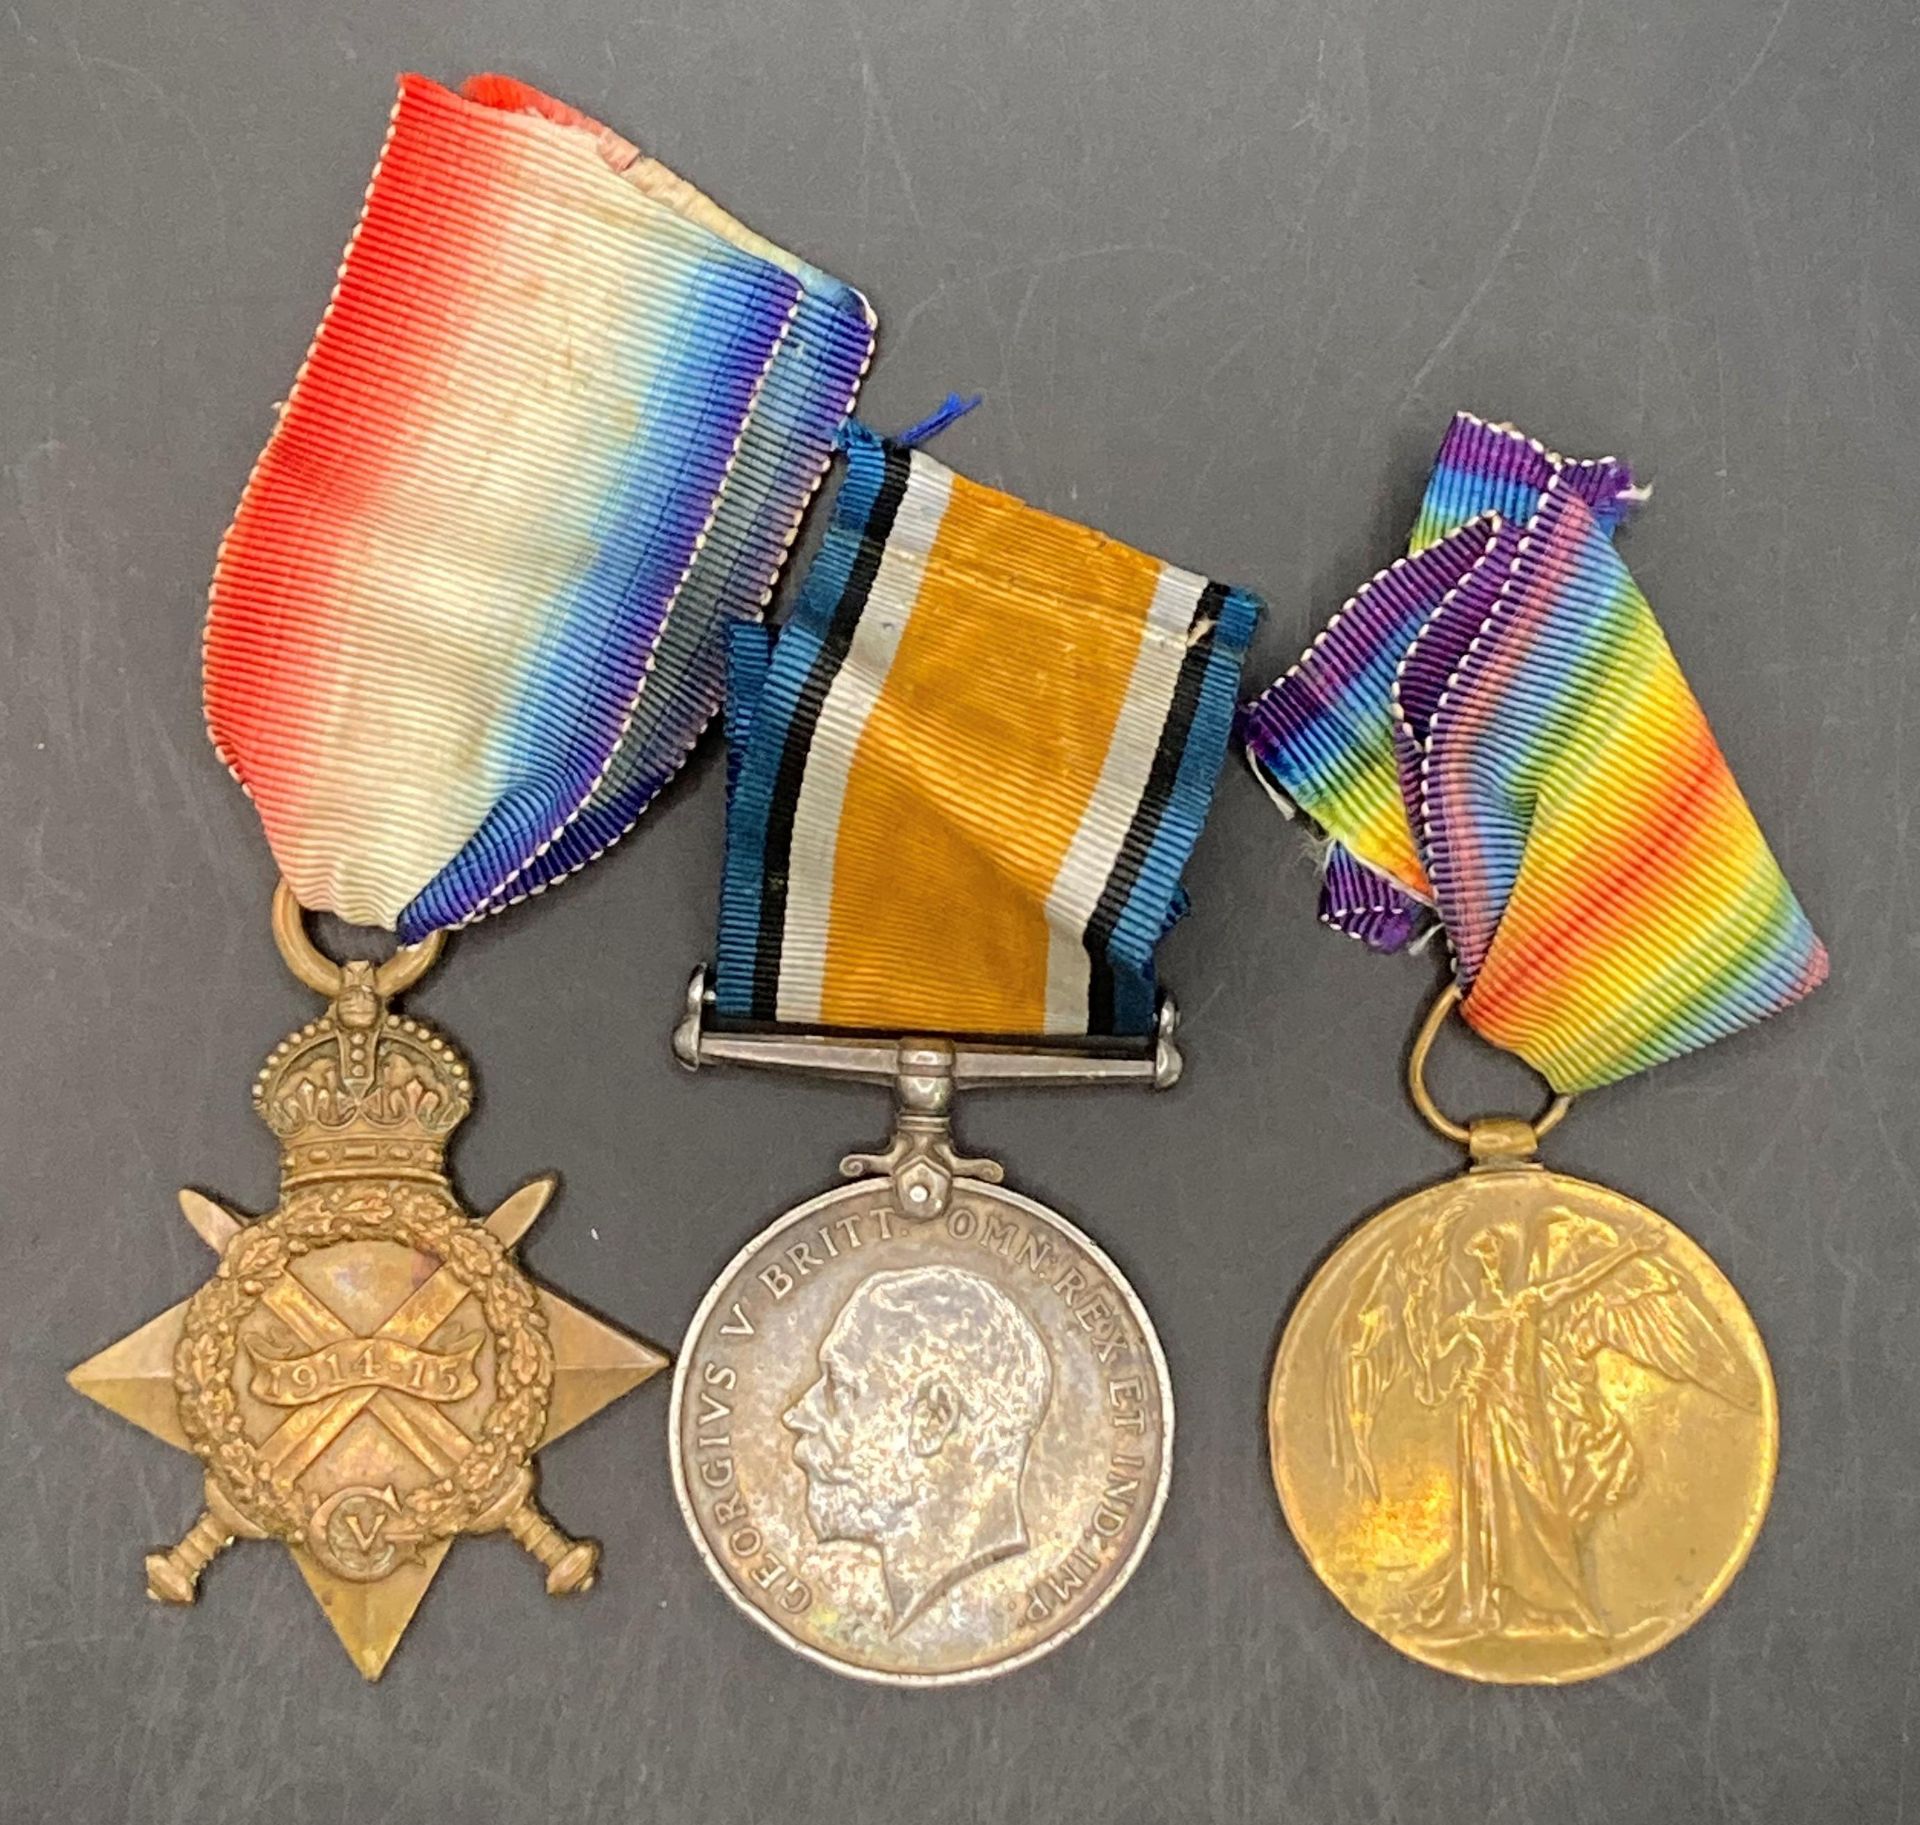 Three First World War medals - 1914-1915 Star,